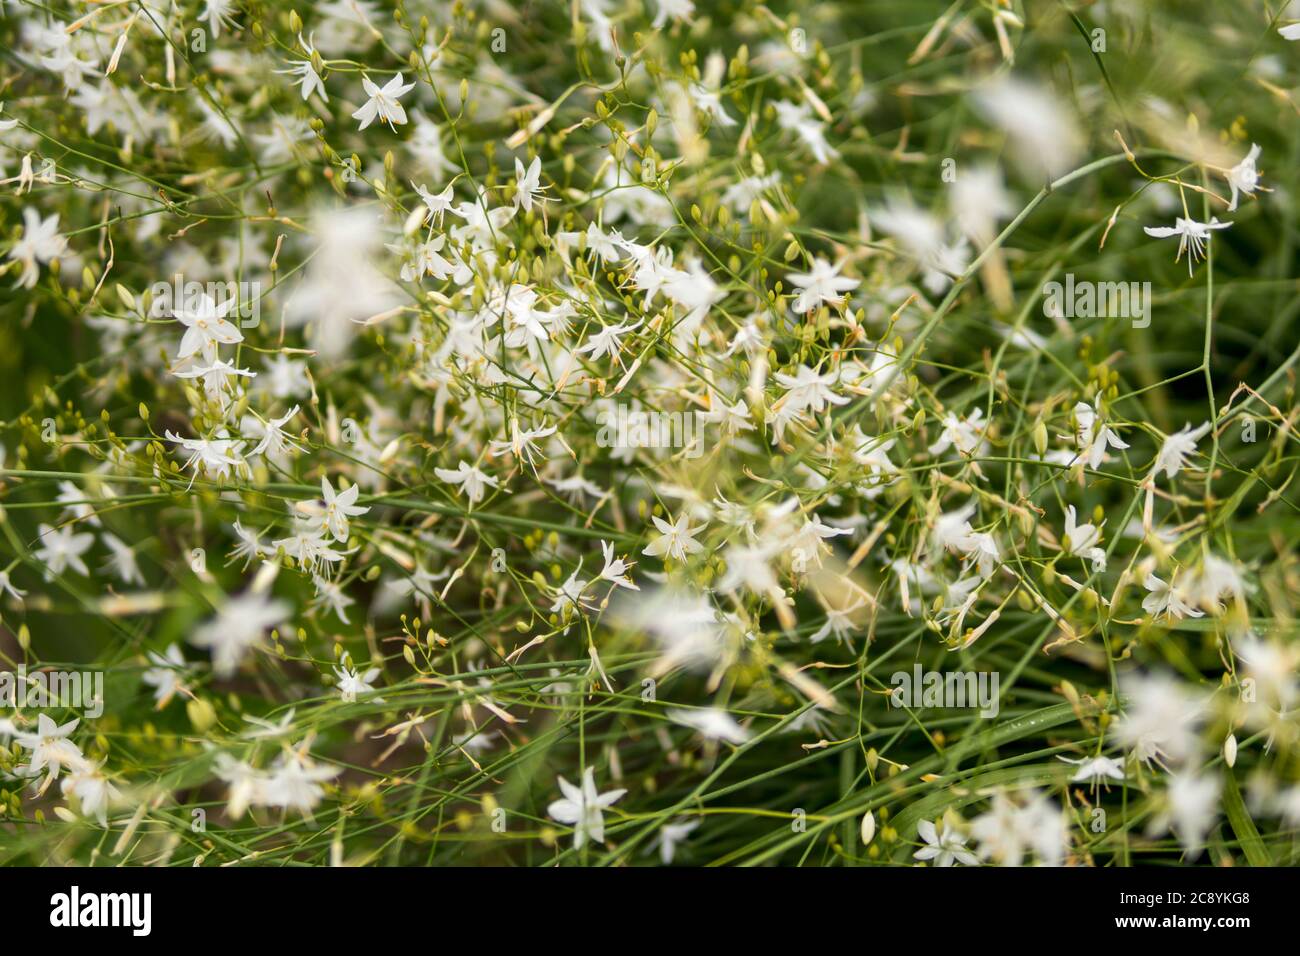 detail of Anthericum ramosum growing in a garden during summer season Stock Photo